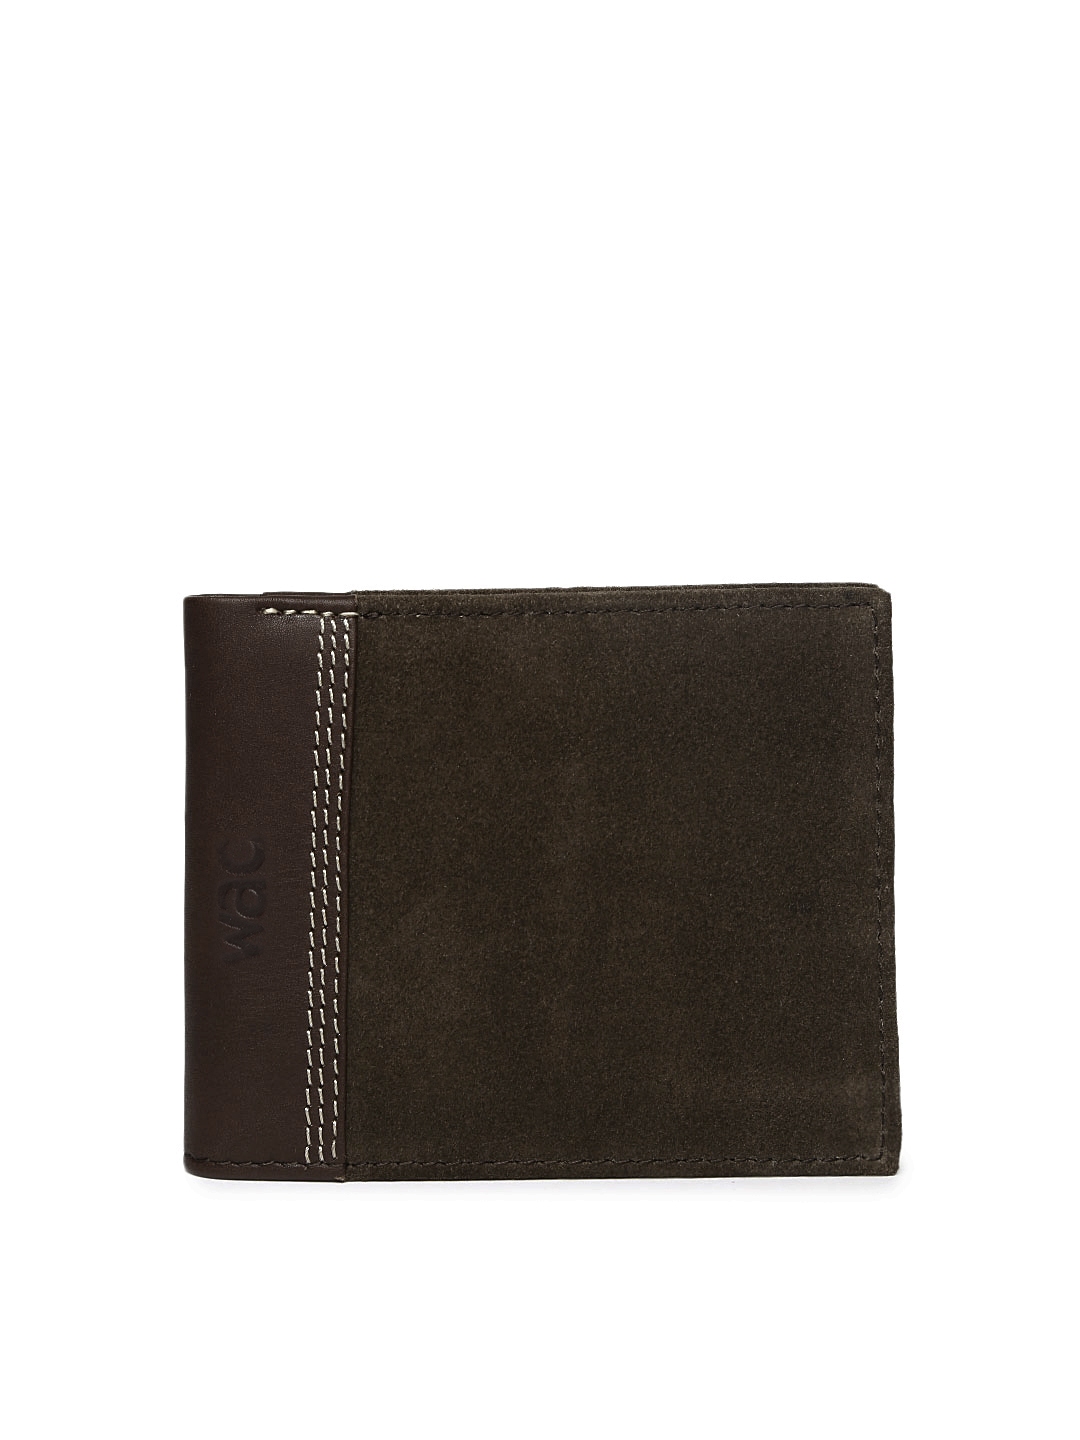 Buy WAC Men Brown Leather Wallet - Wallets for Men 966116 | Myntra